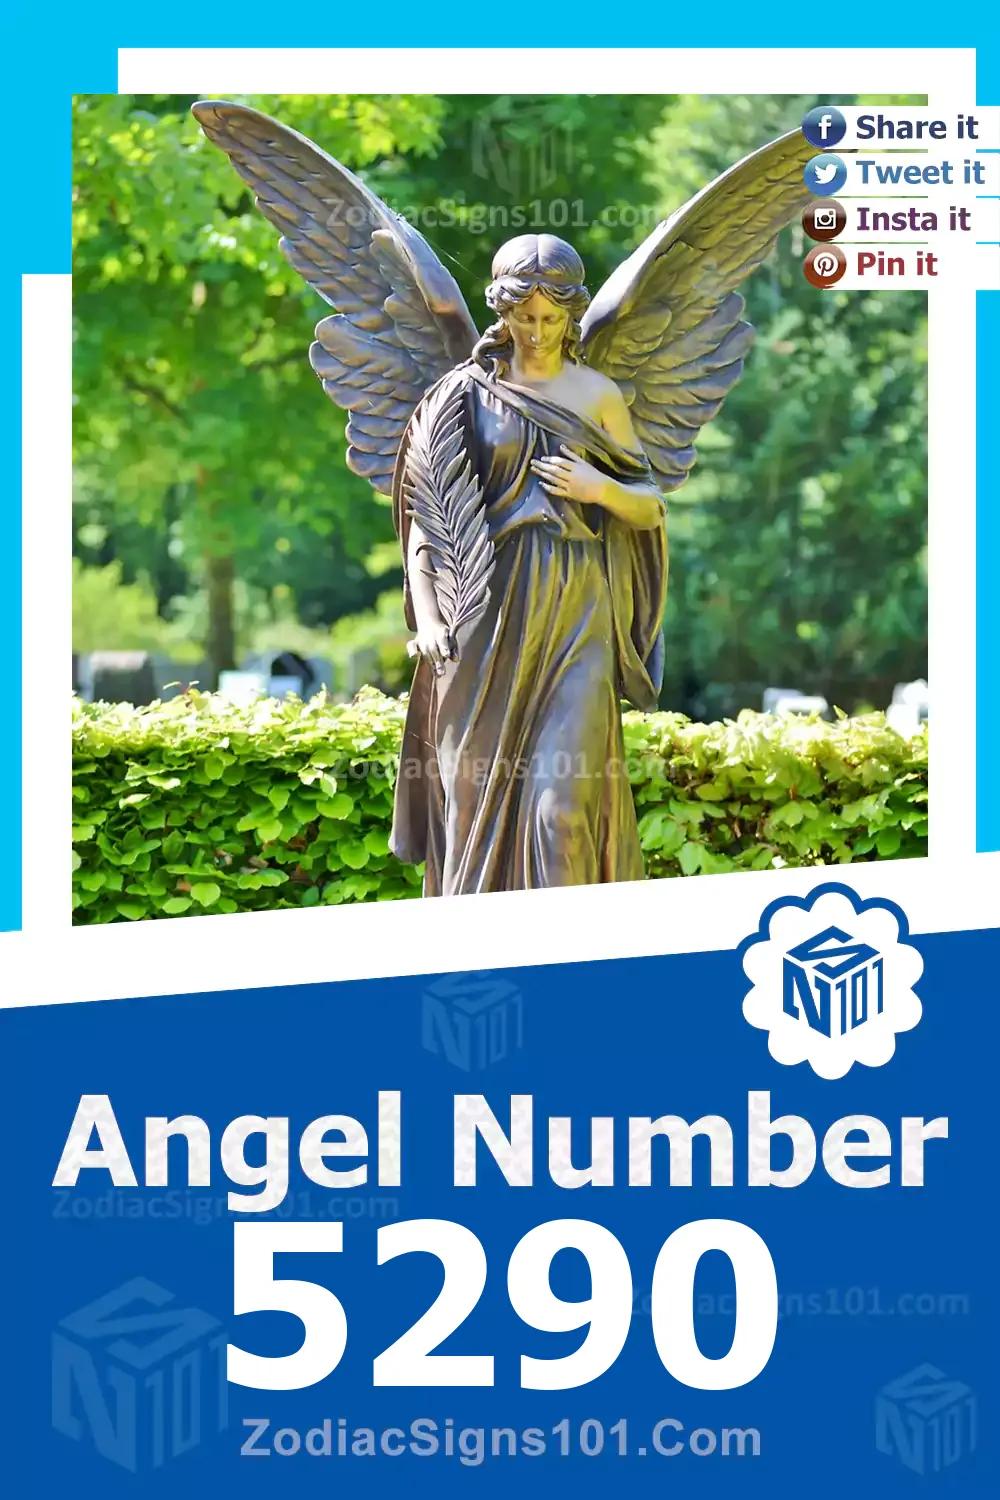 5290-Angel-Number-Meaning.jpg